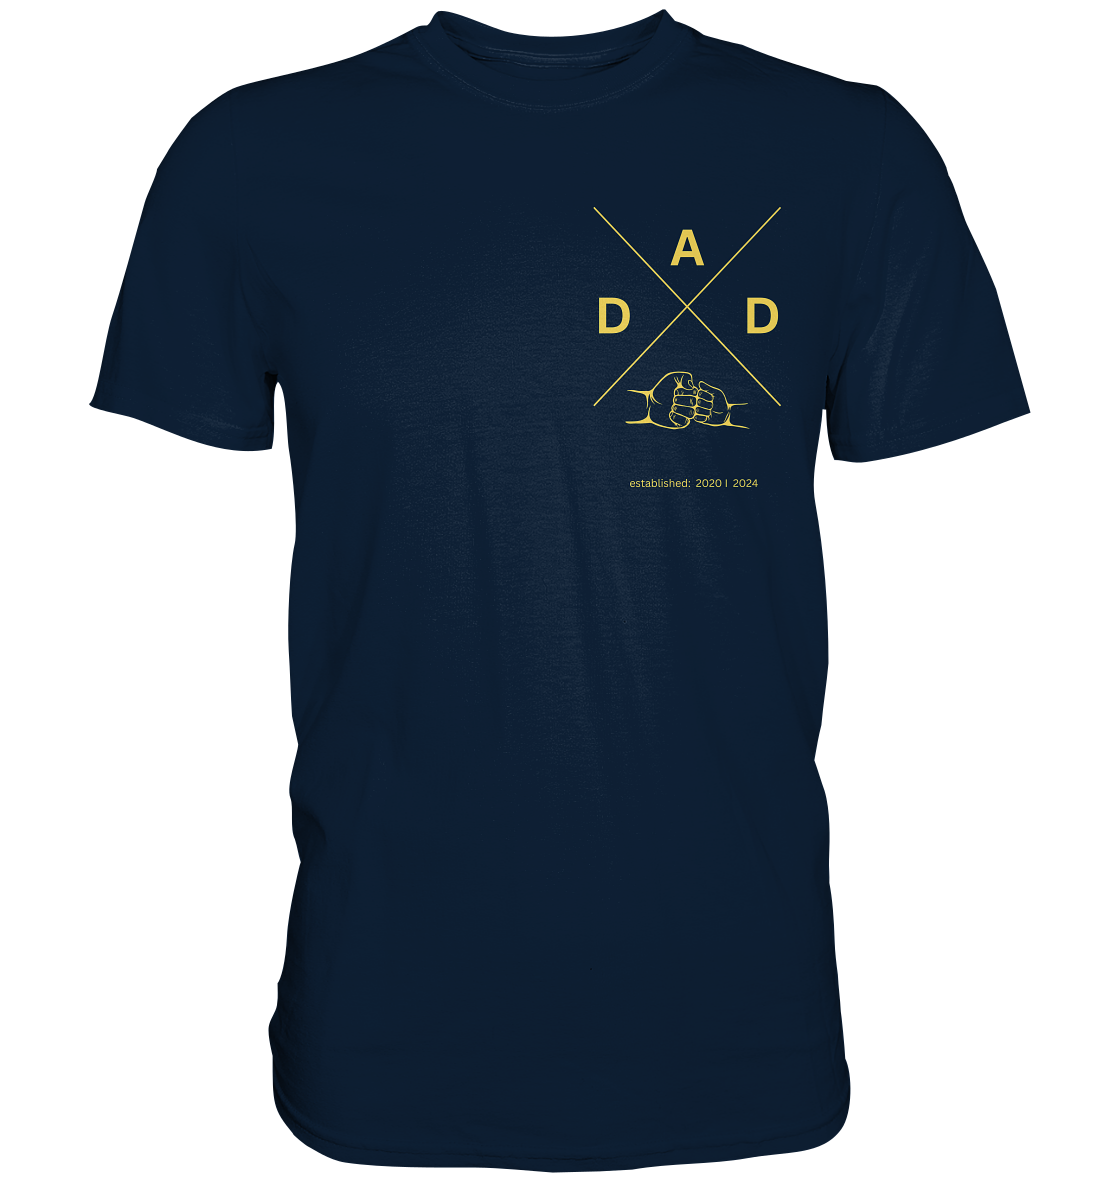 DAD Cross mit Faust, Datum personalisierbar - Premium Shirt